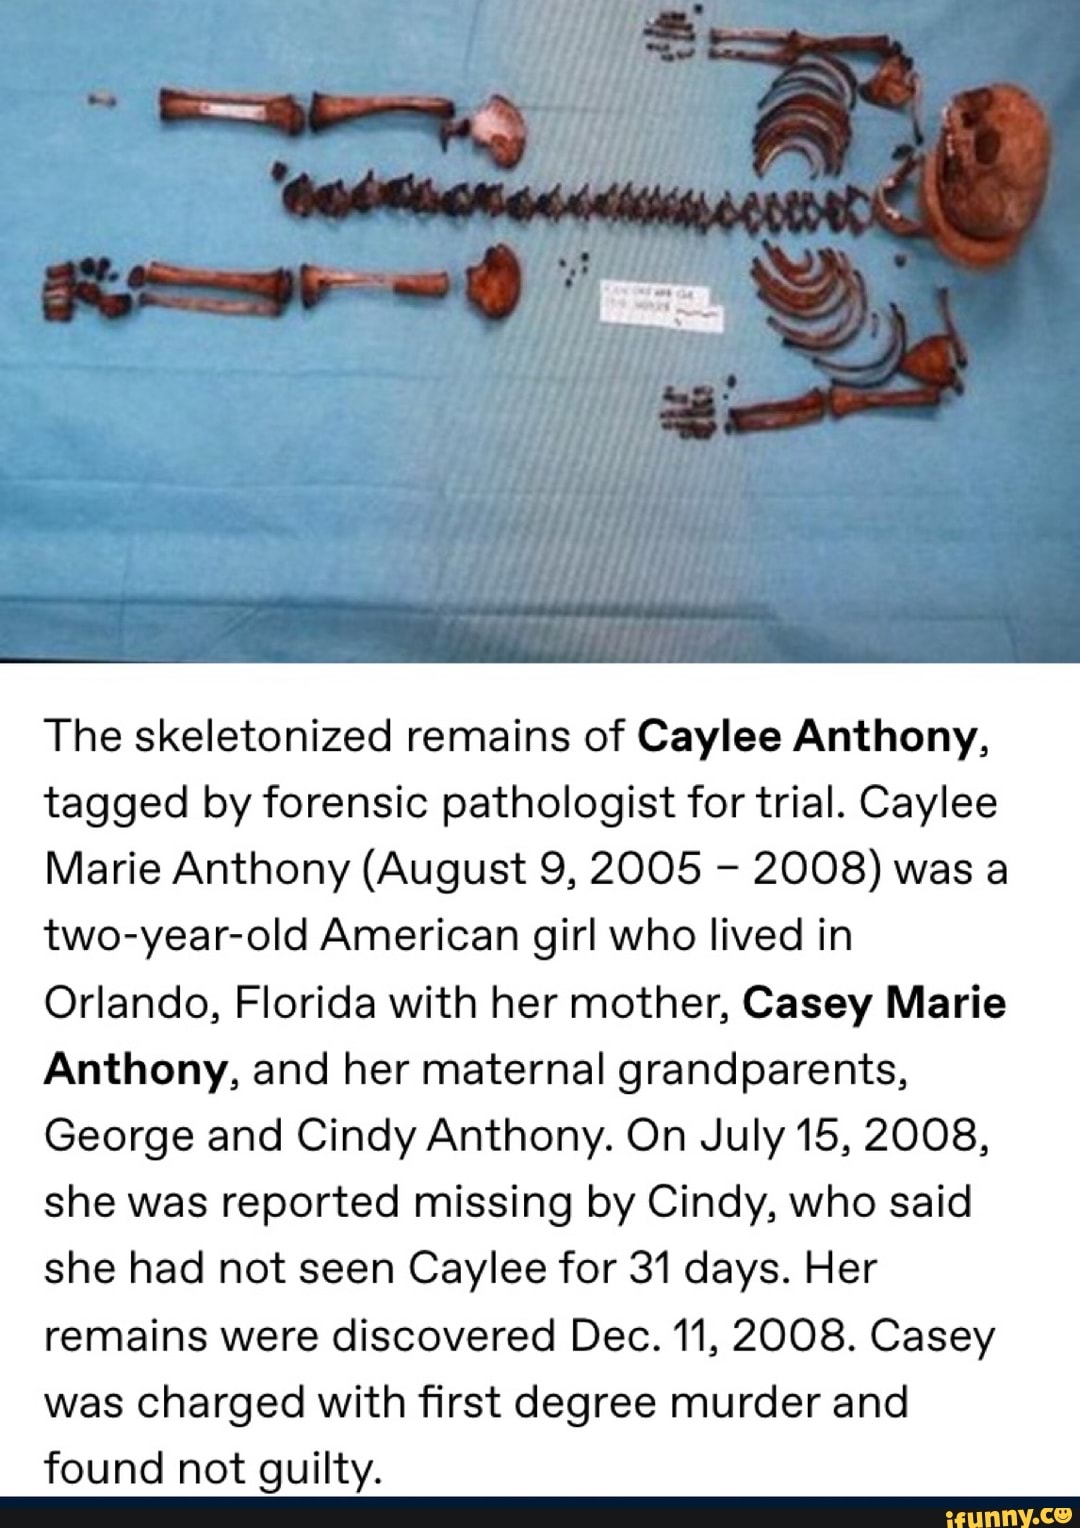 caylee anthony skeleton